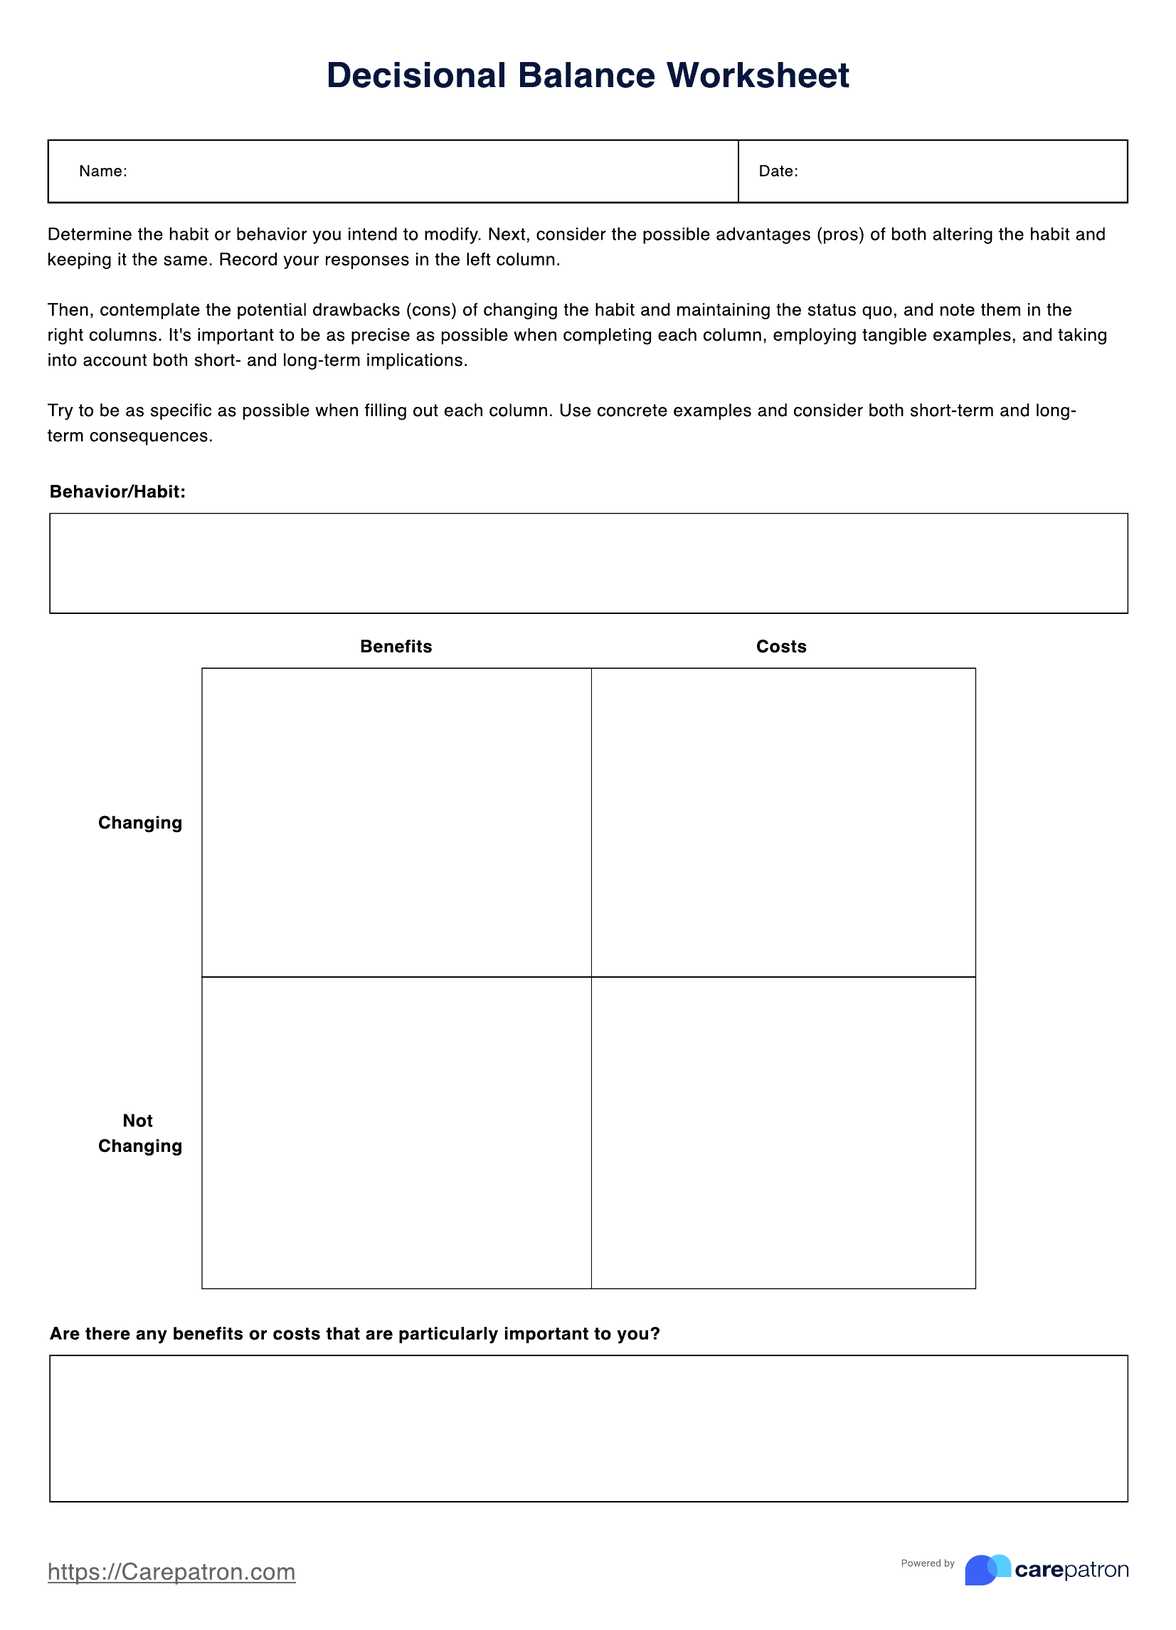 Decisional Balance Worksheet PDF Example